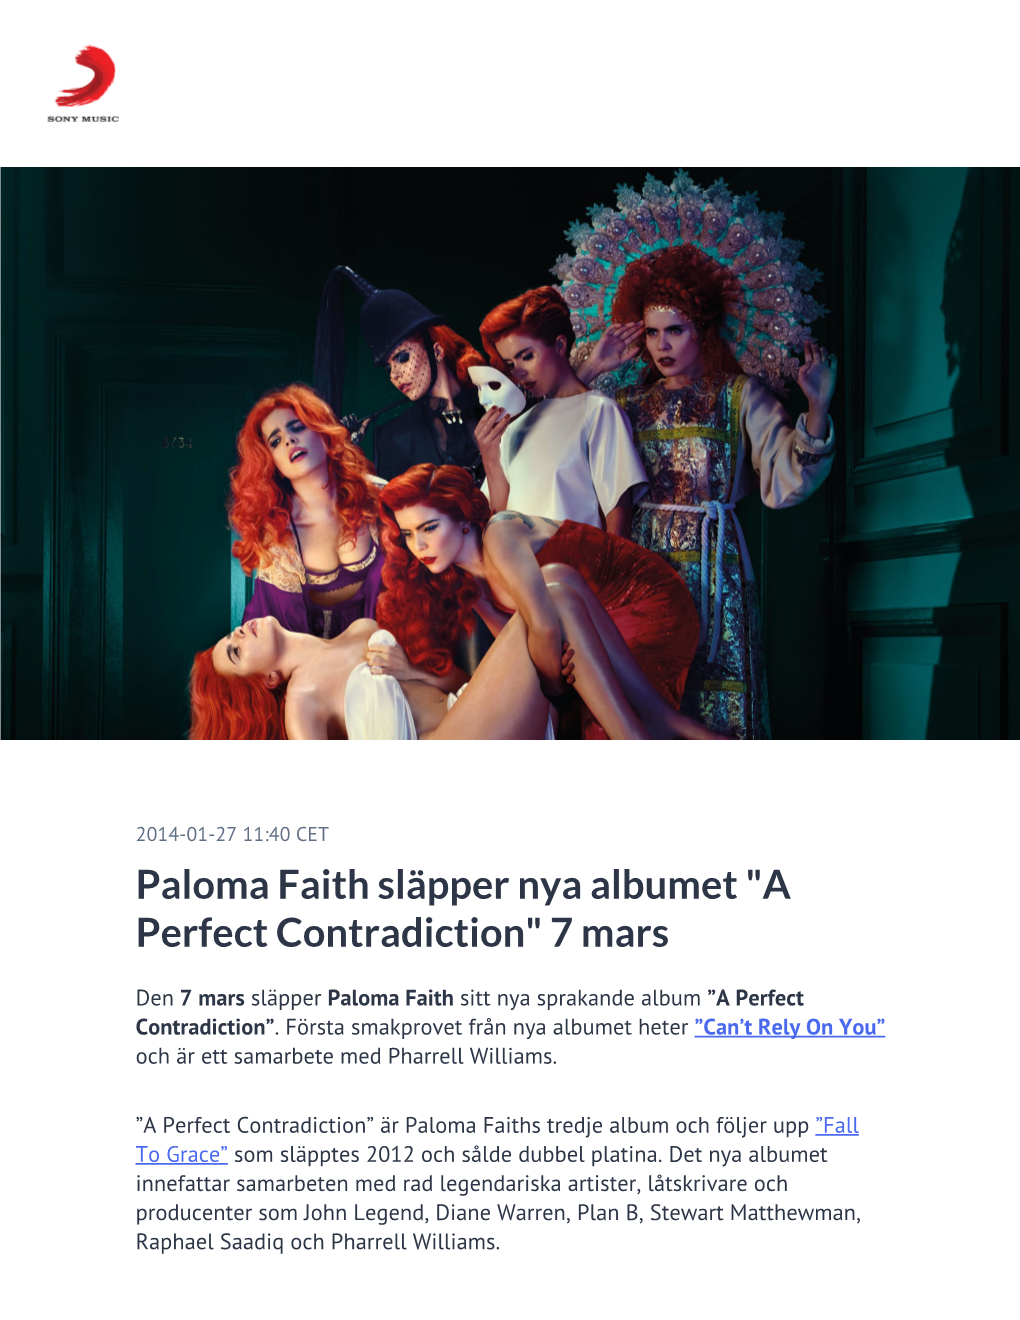 Paloma Faith Släpper Nya Albumet "A Perfect Contradiction" 7 Mars